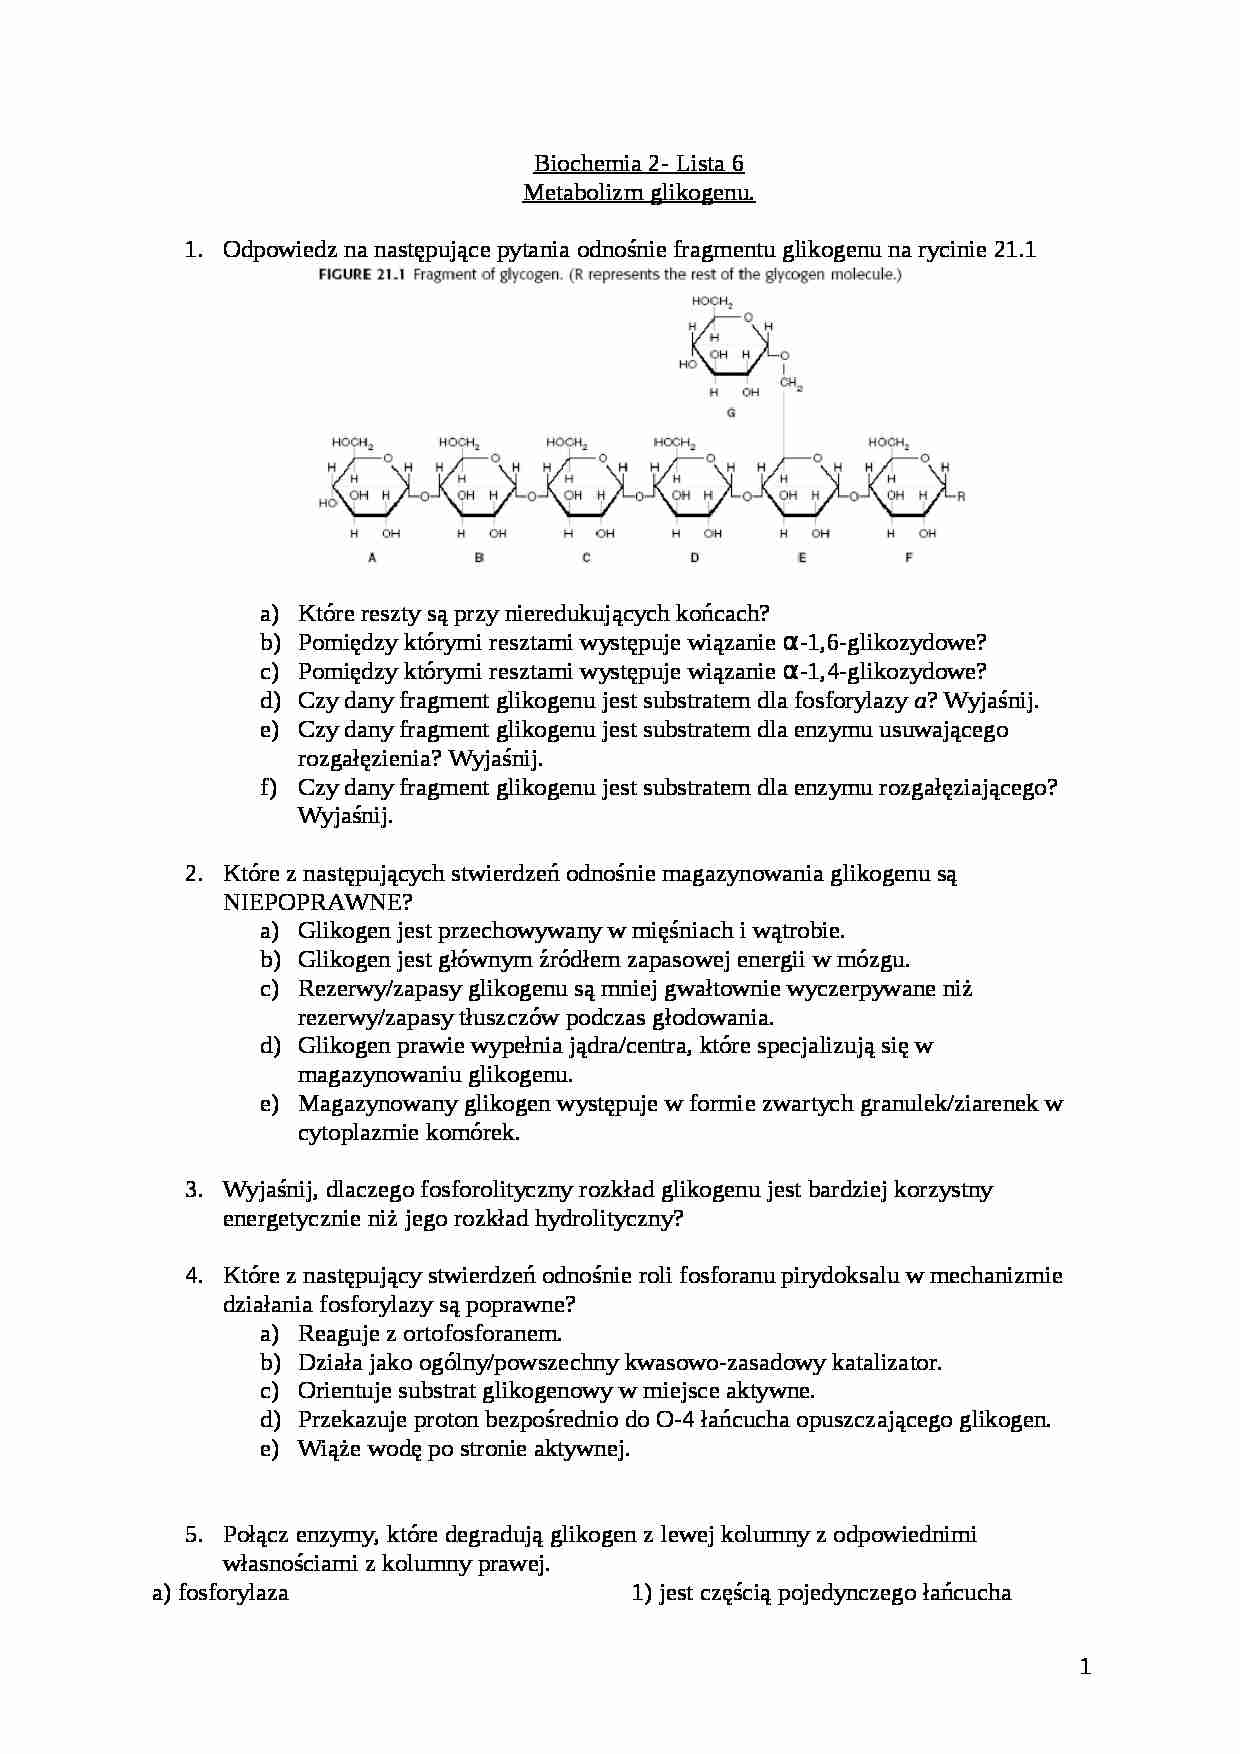 Metabolizm glikogenu- zagadnienia - strona 1